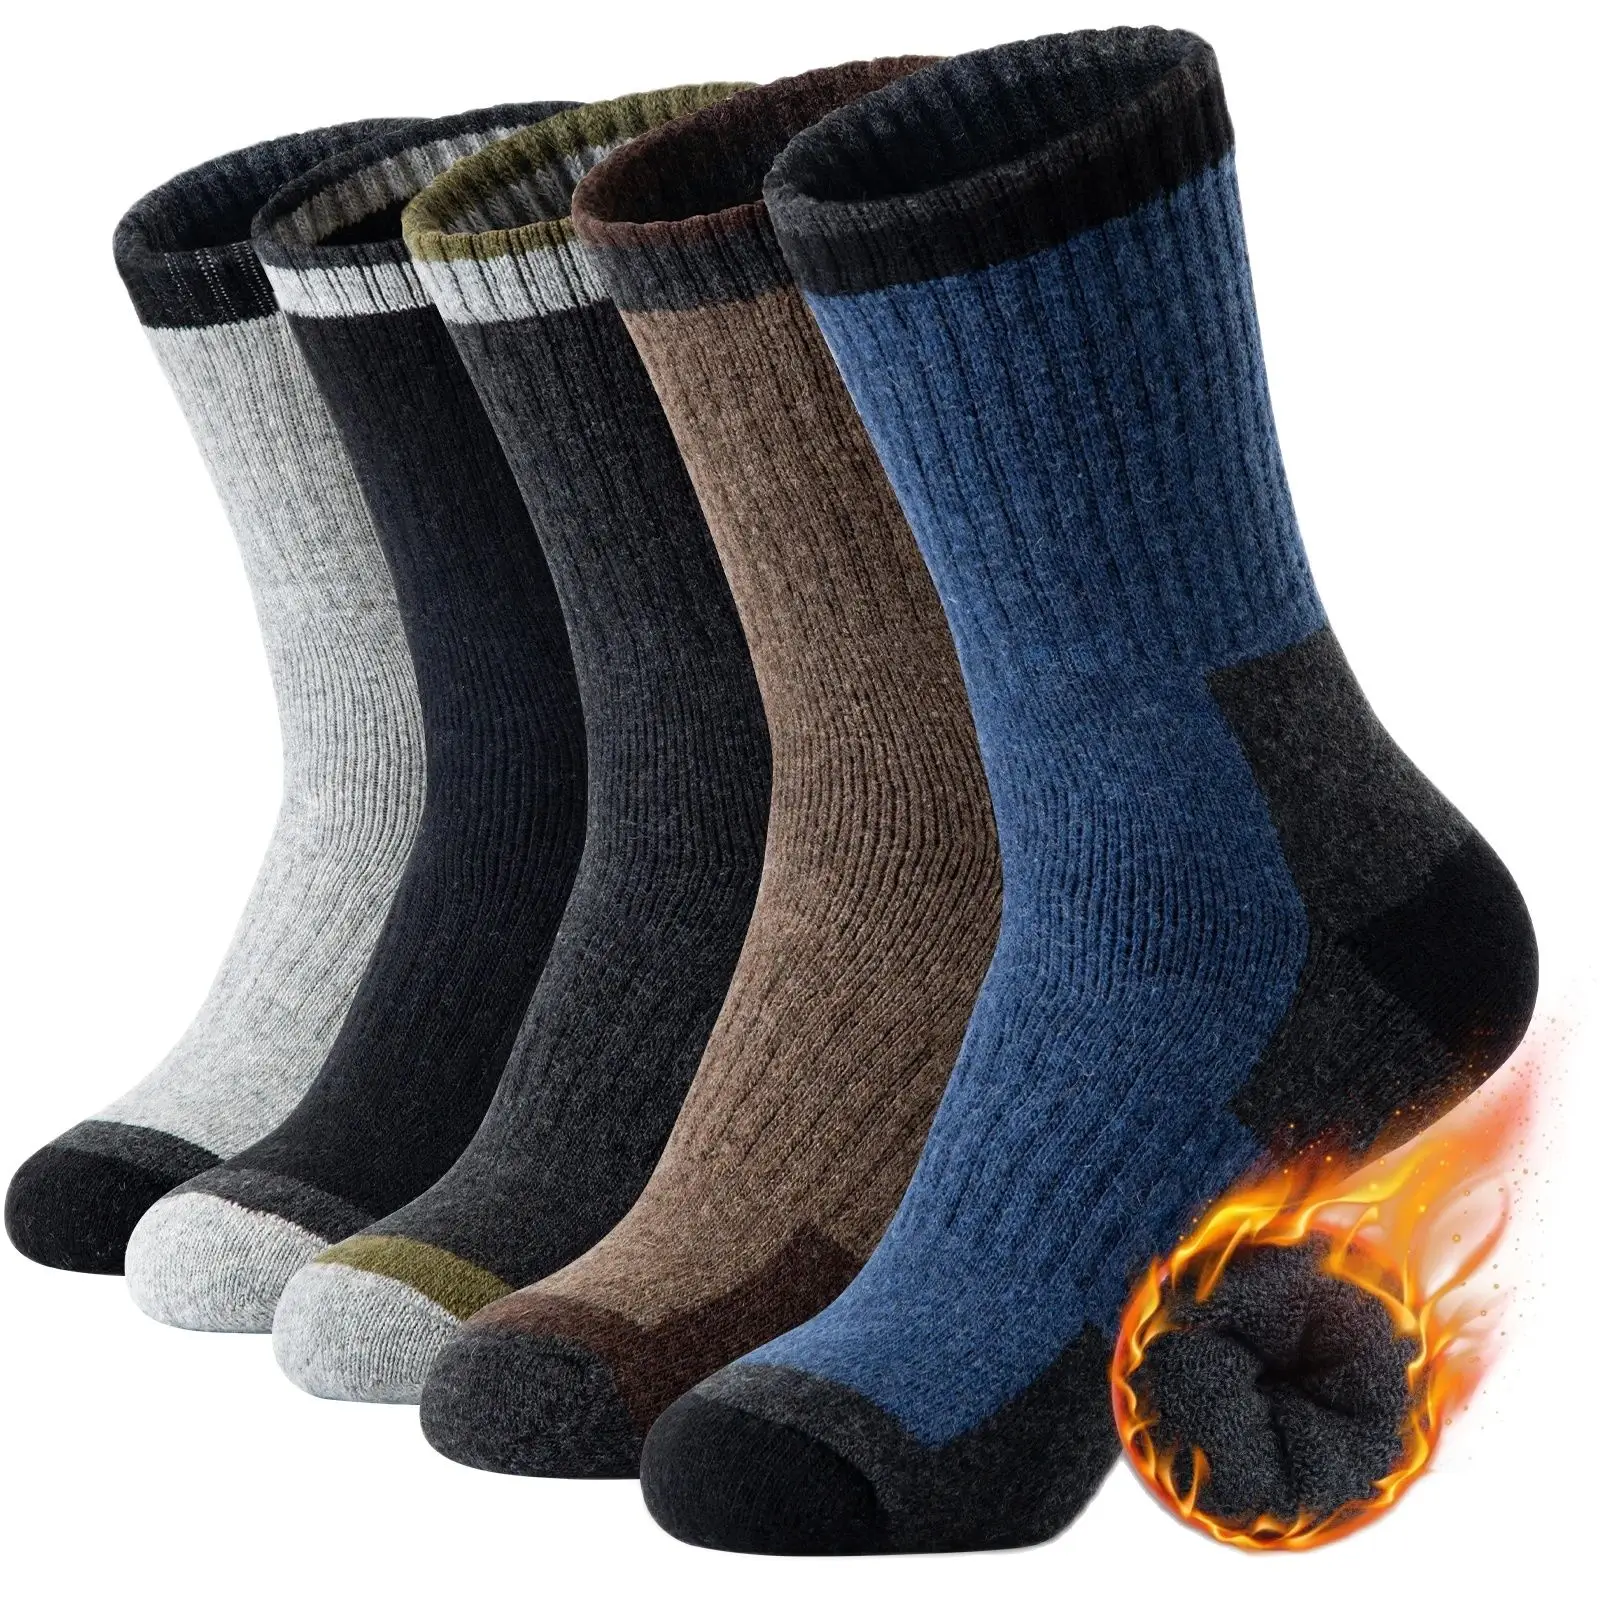 

5 Pairs Merino Wool Socks Men's Wool Hiking Socks Soft Warm Winter Casual Crew Moisture-Wicking Socks for Indoors Outdoors